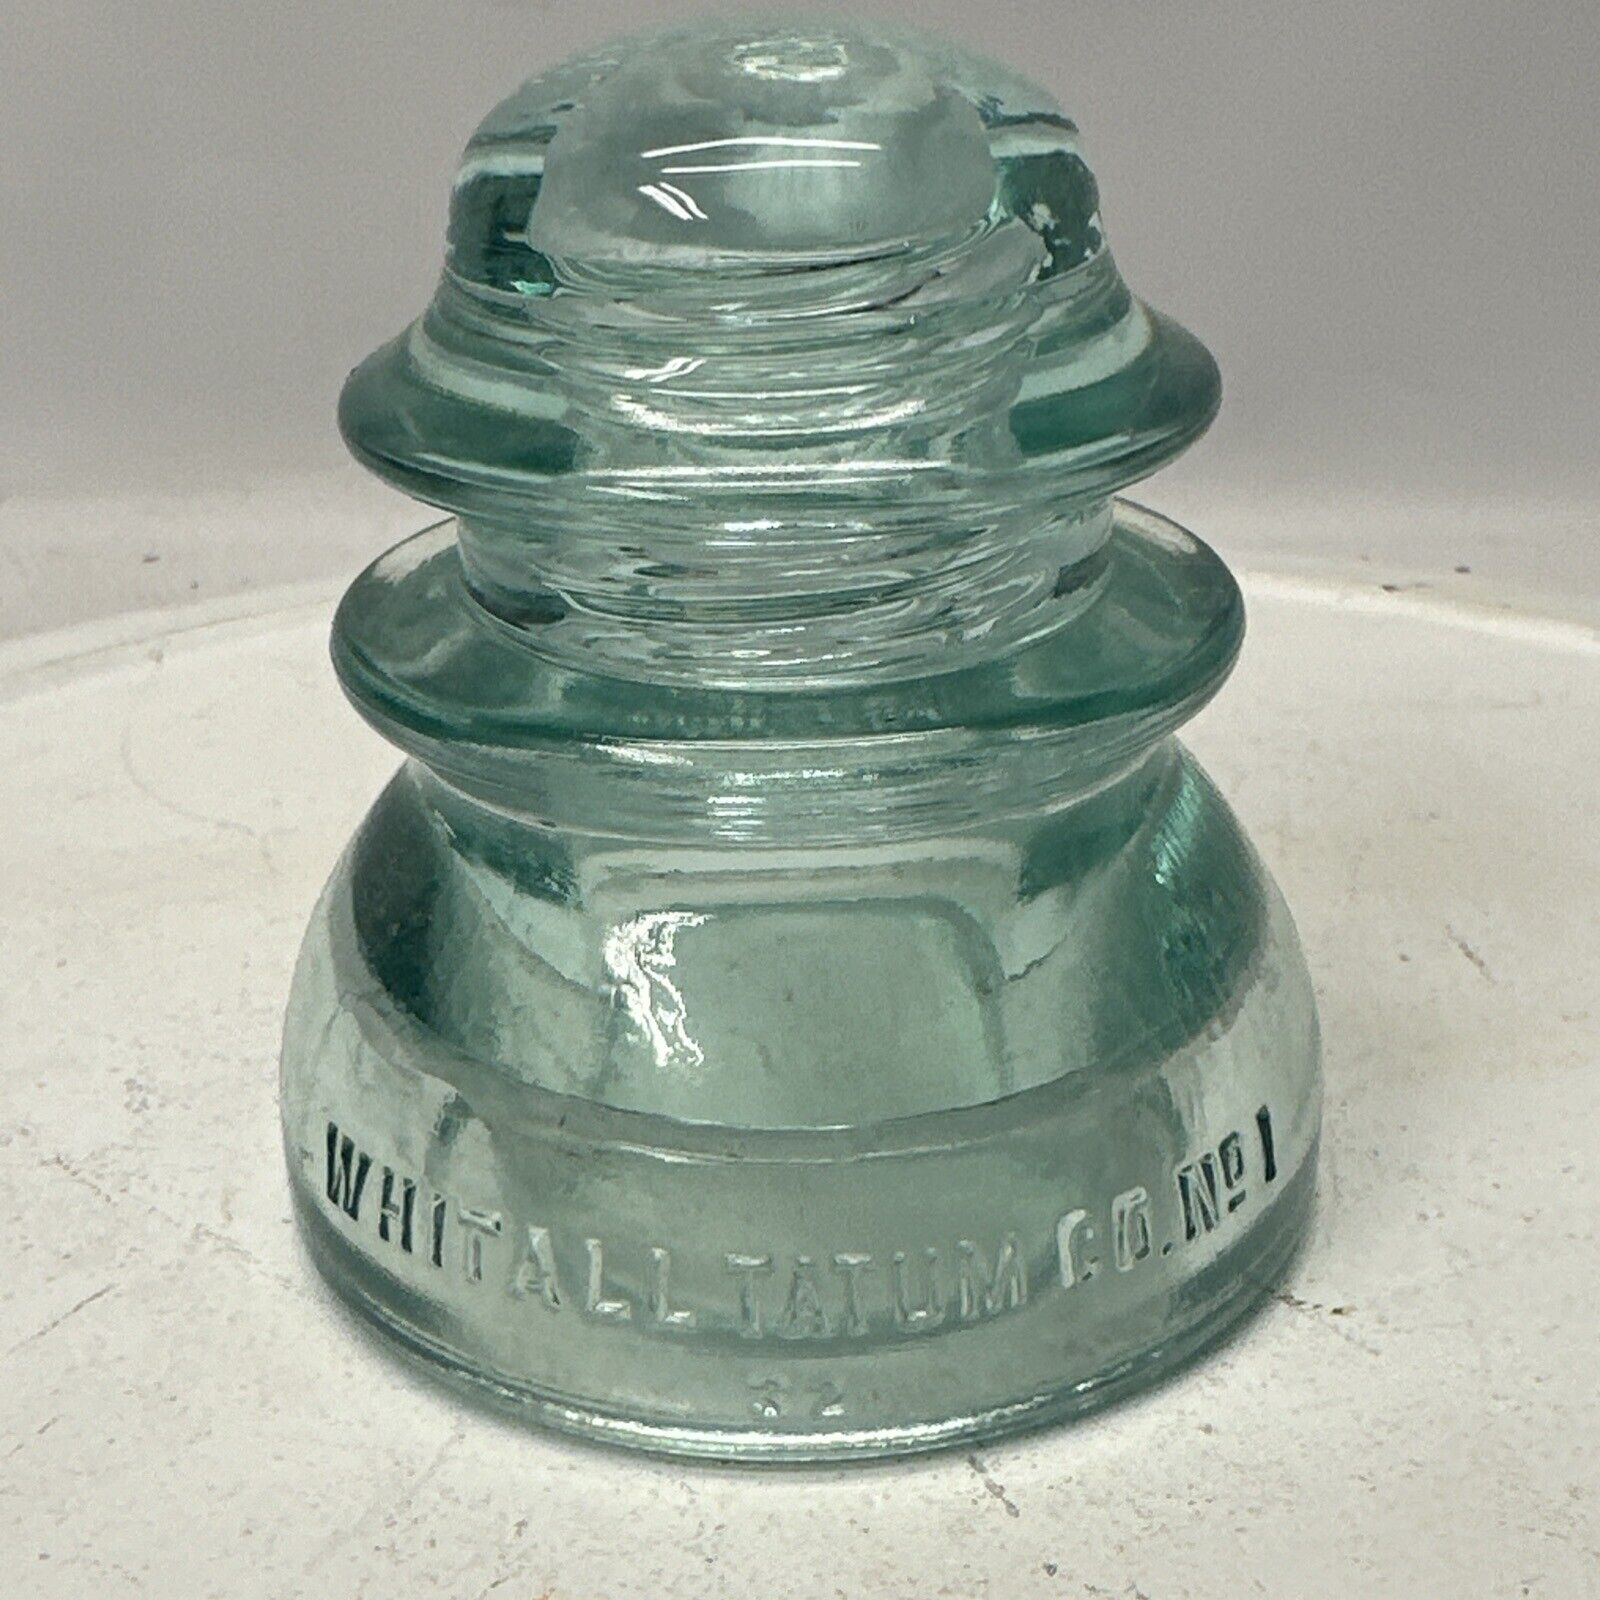 Vintage - Glass Insulator - Beautiful Aqua Blue - Whitall Tatum Co. - No. 1